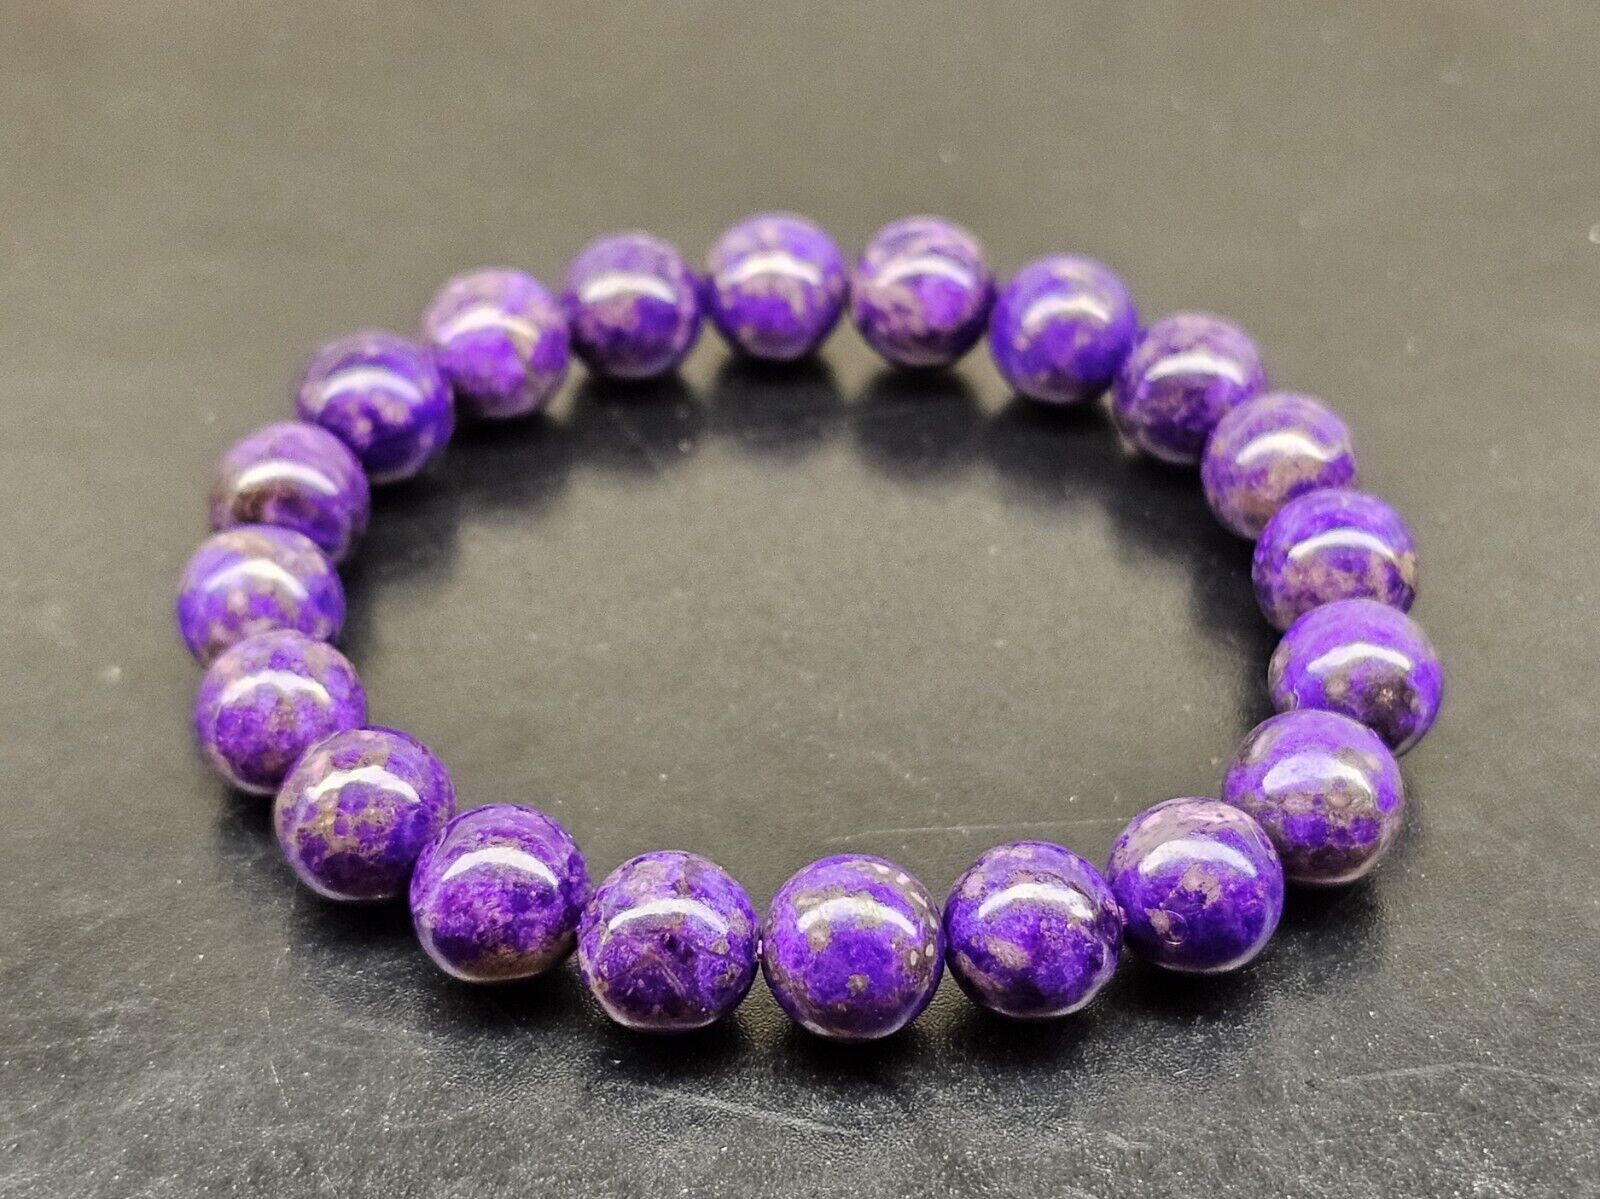 Rare Top Quality Untreated Genuine Royal Purple Sugilite Beads Bracelet 9.3mm